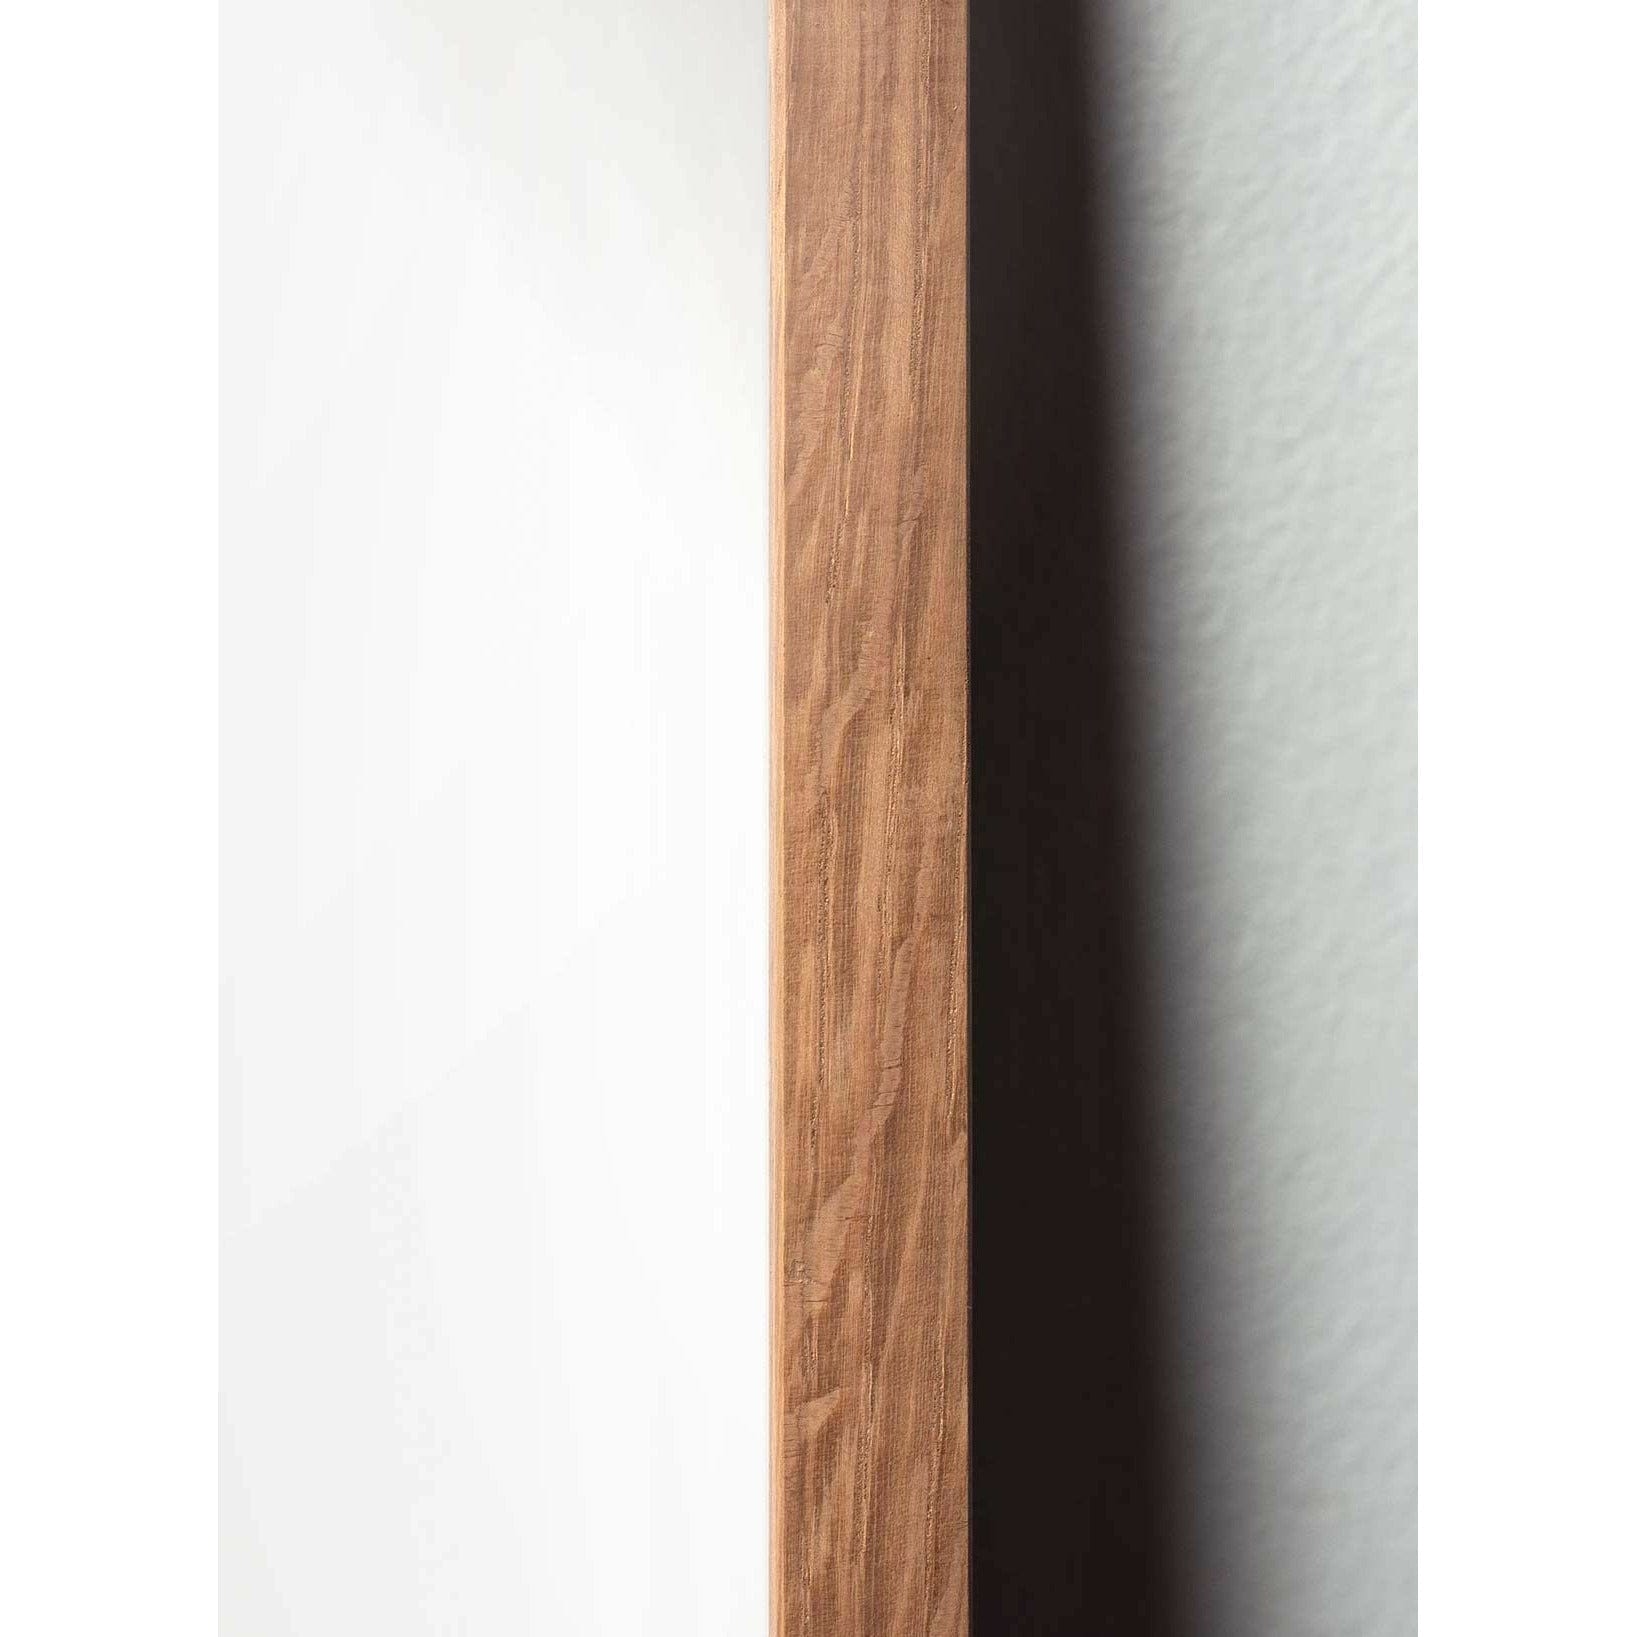 Póster clásico de hormigas de creación, marco hecho de madera clara A5, fondo blanco